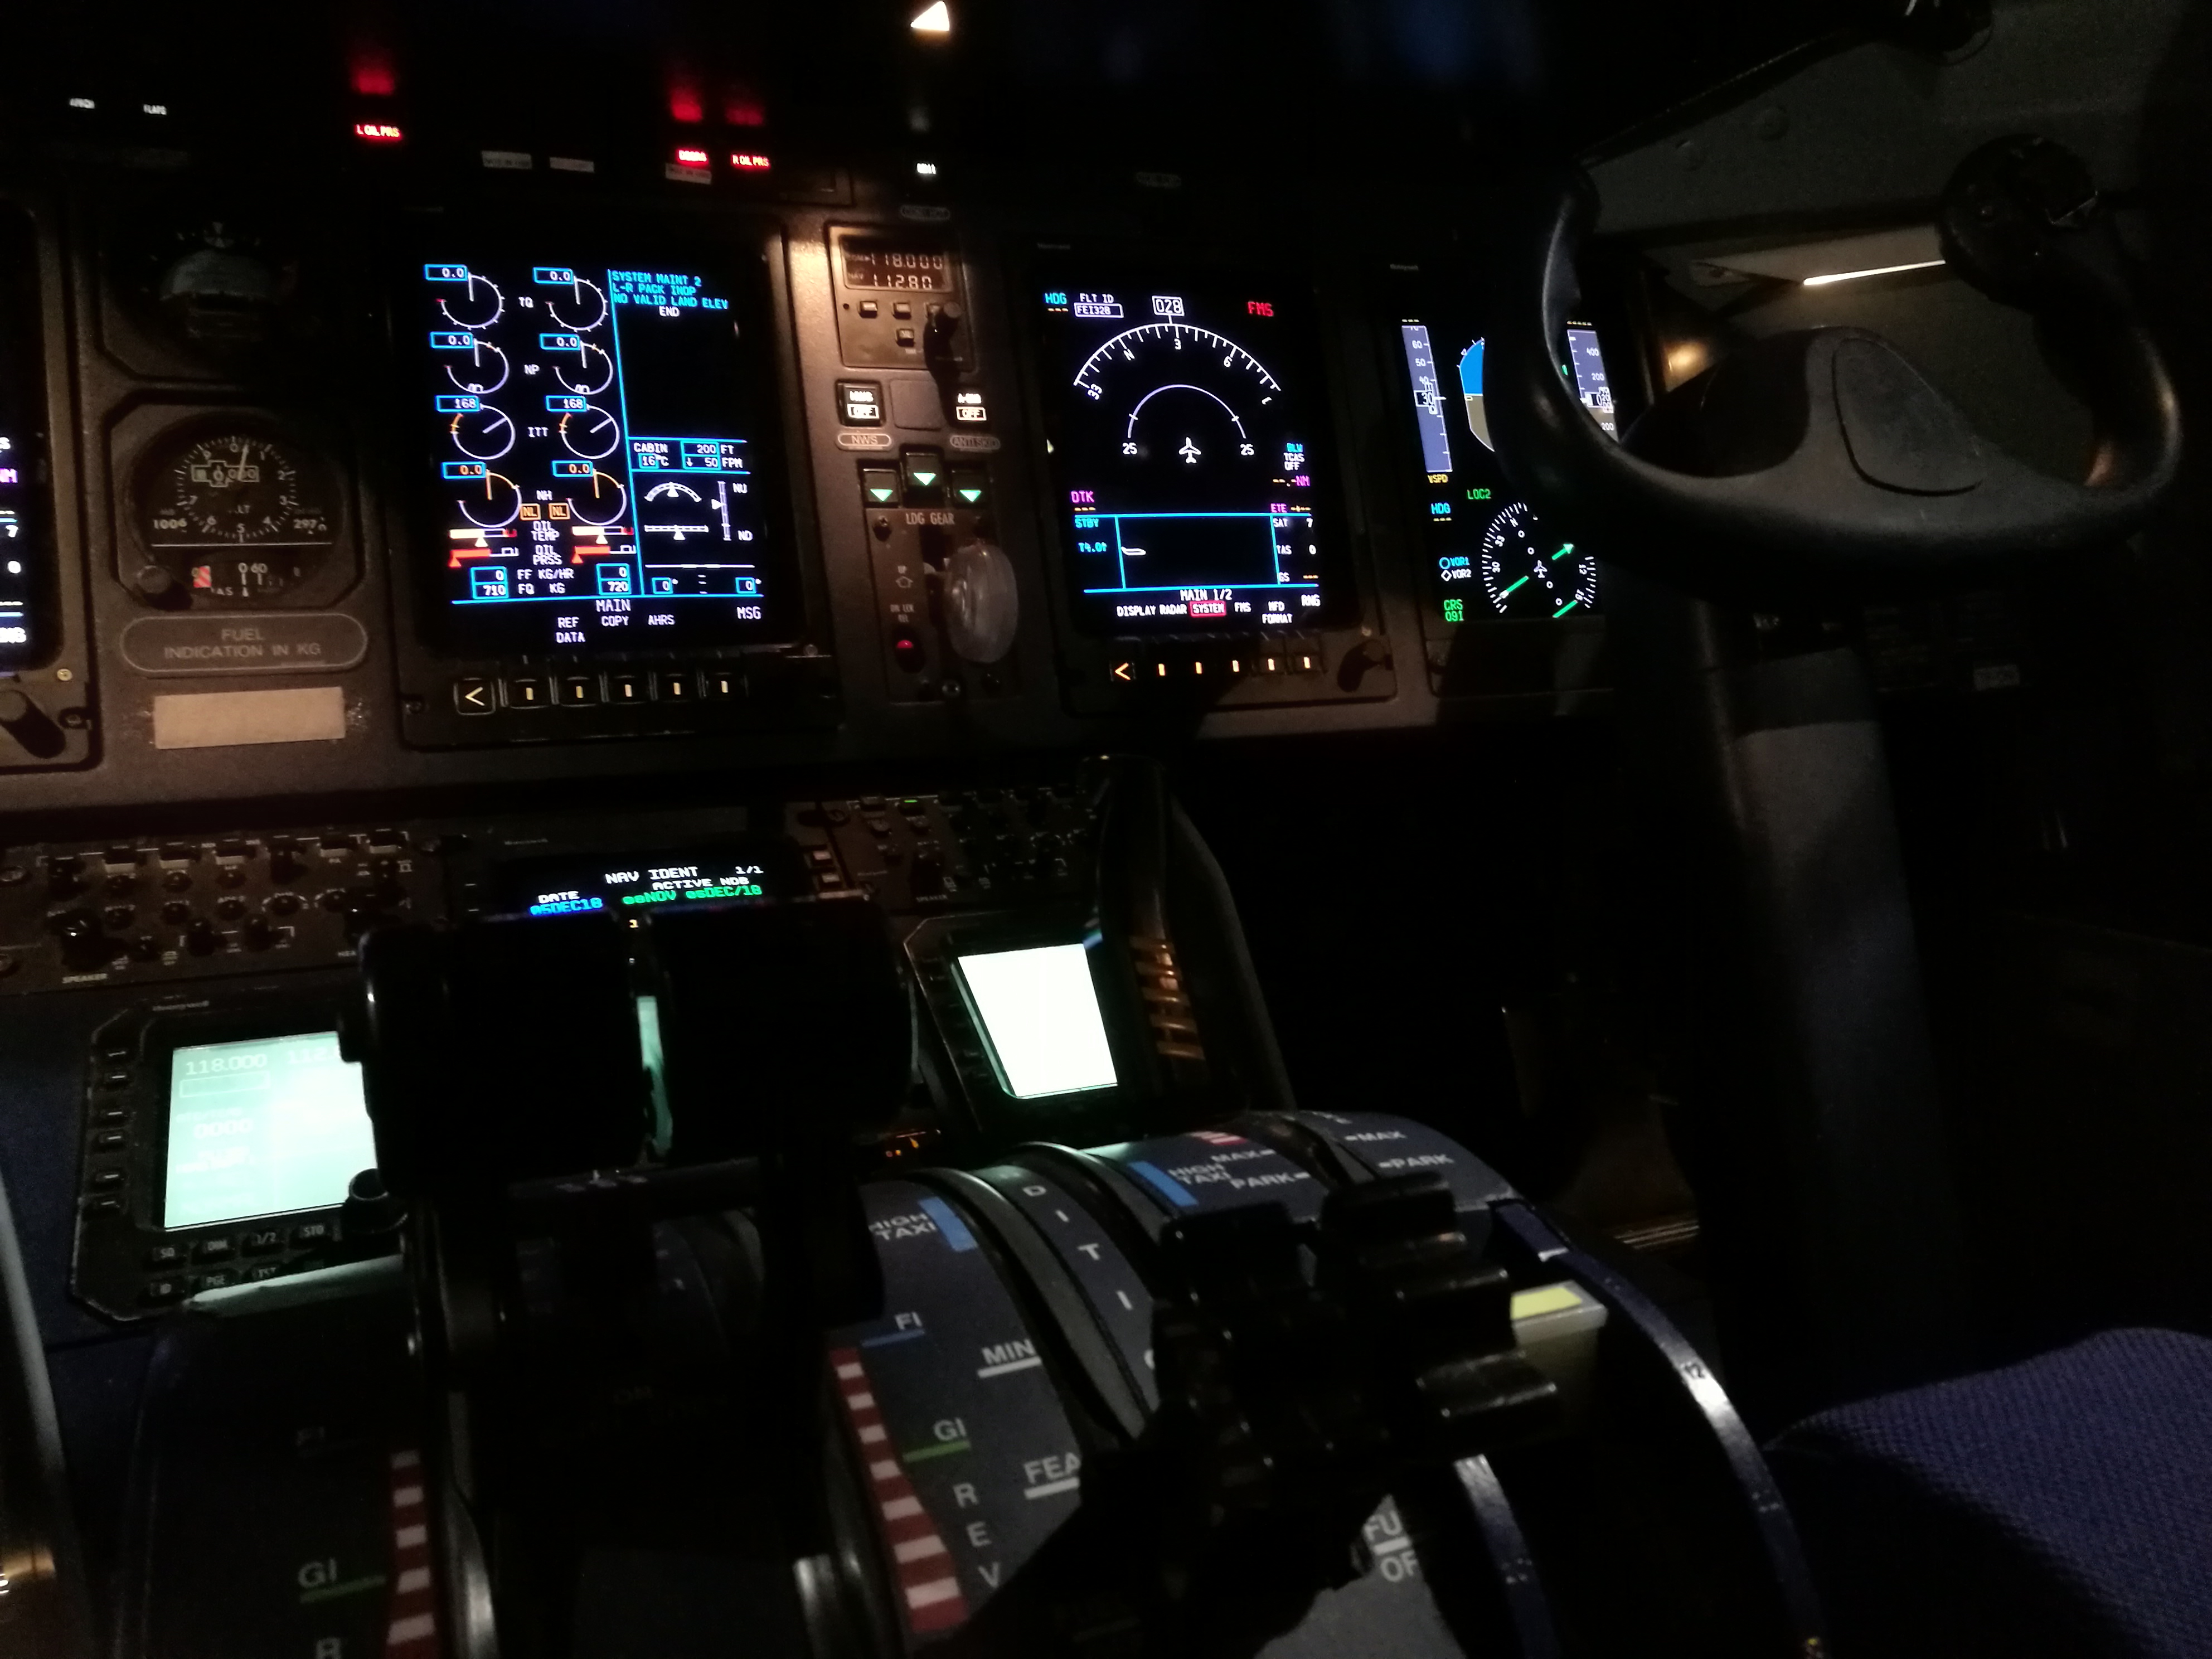 The cockpit of "Eagle Air" Dornier 328 (reg. TF-ORI) // Source: Flugblogg